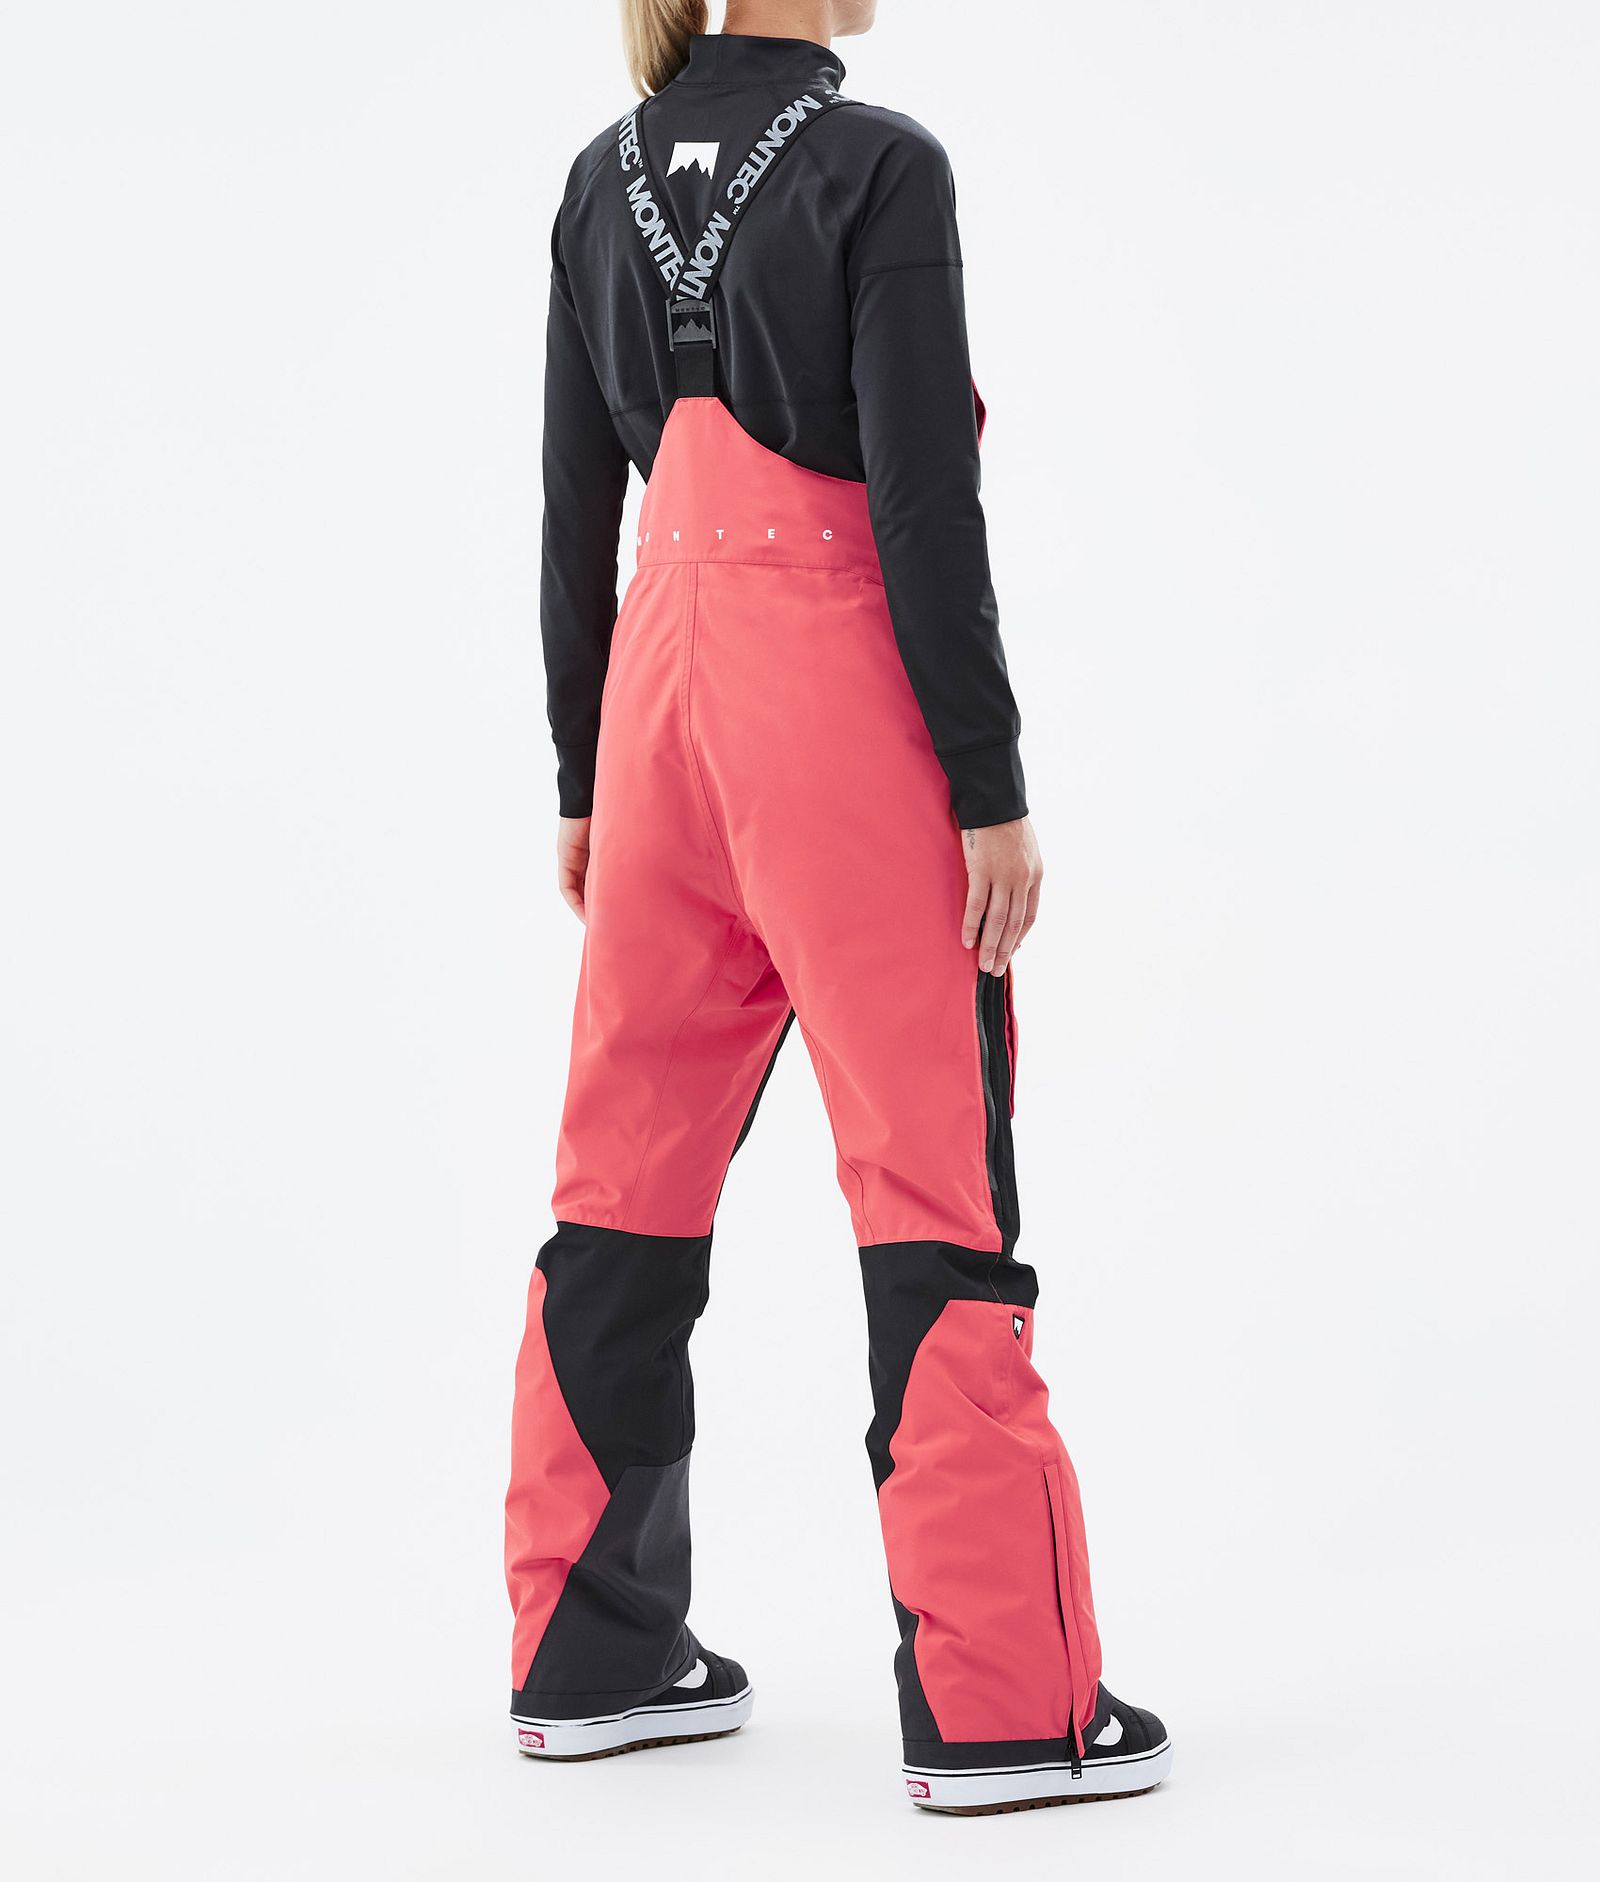 Fawk W Pantalones Snowboard Mujer Coral/Black